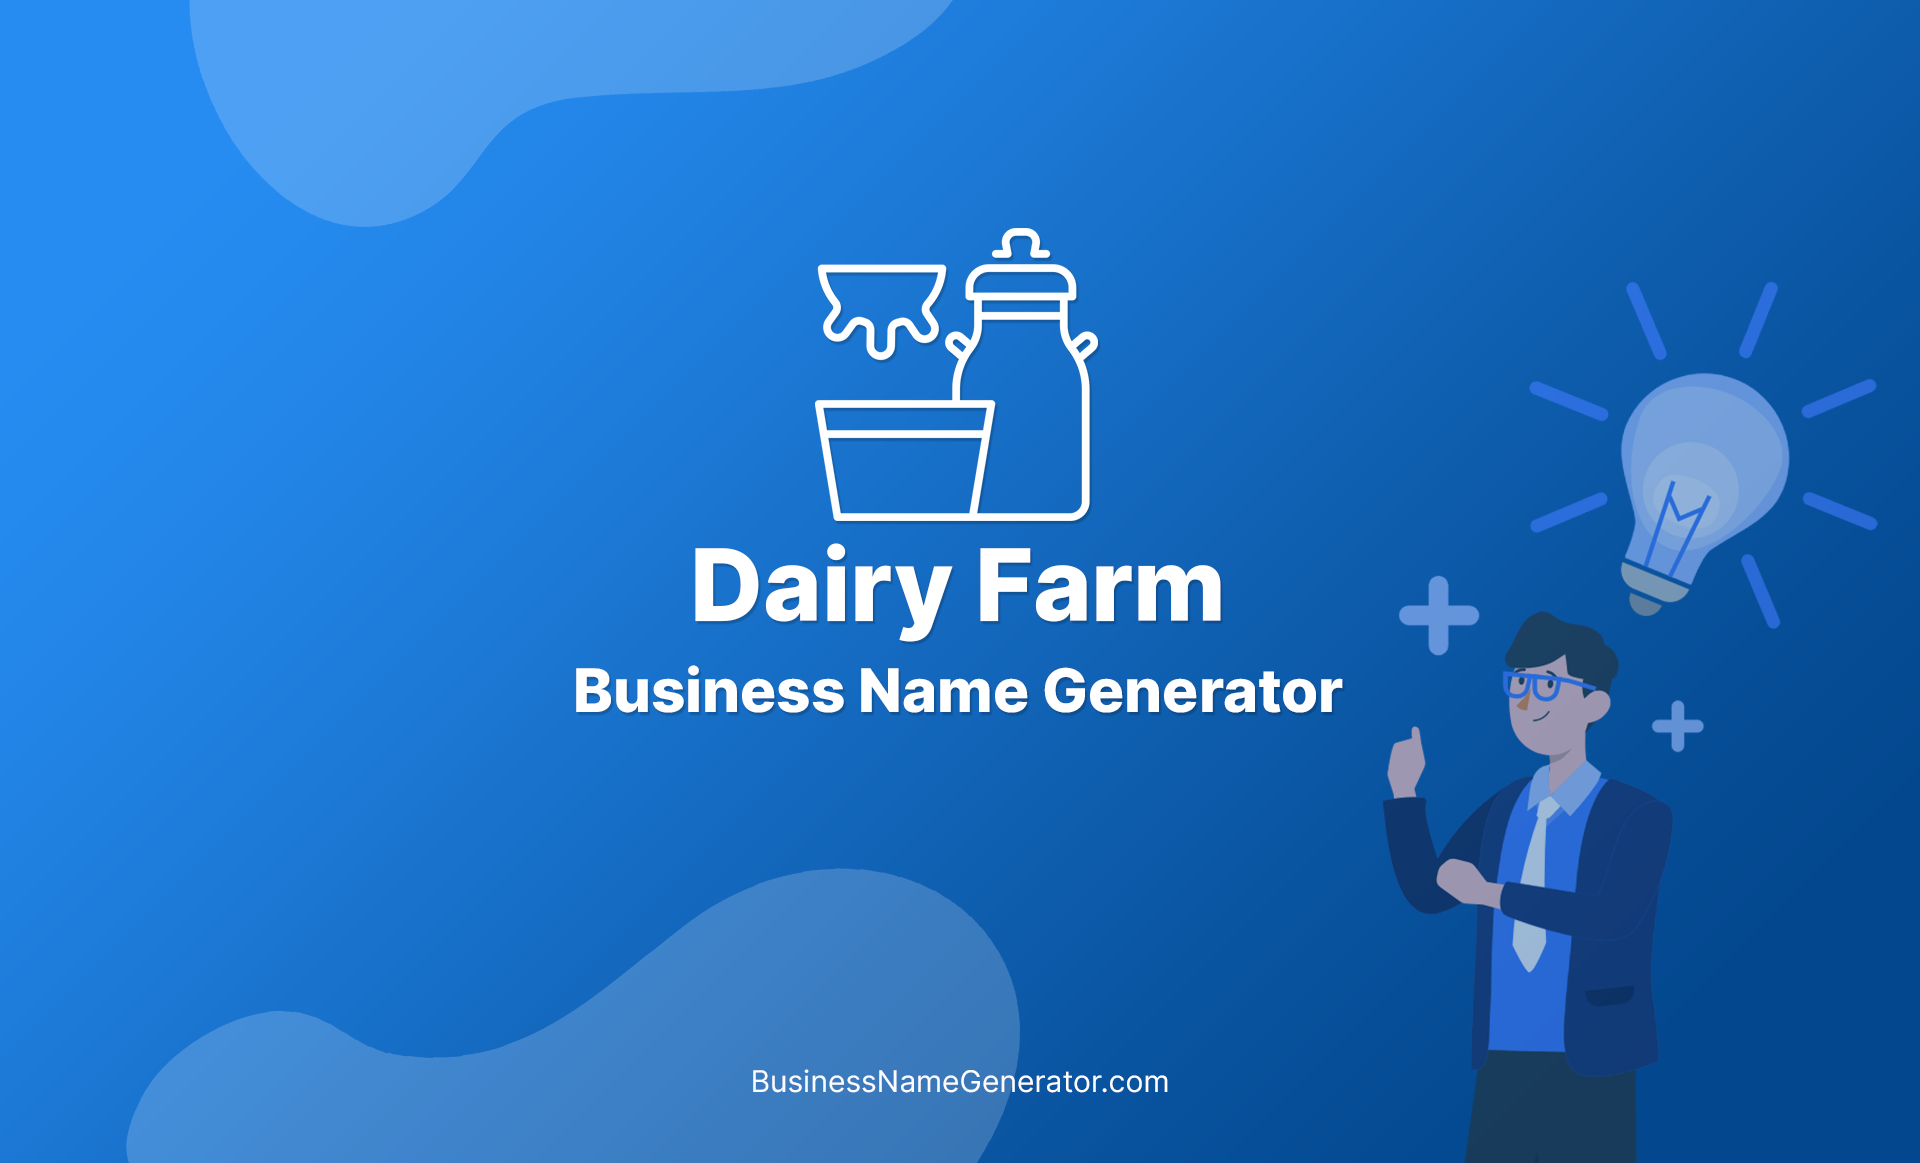 Dairy Farm Business Name Generator